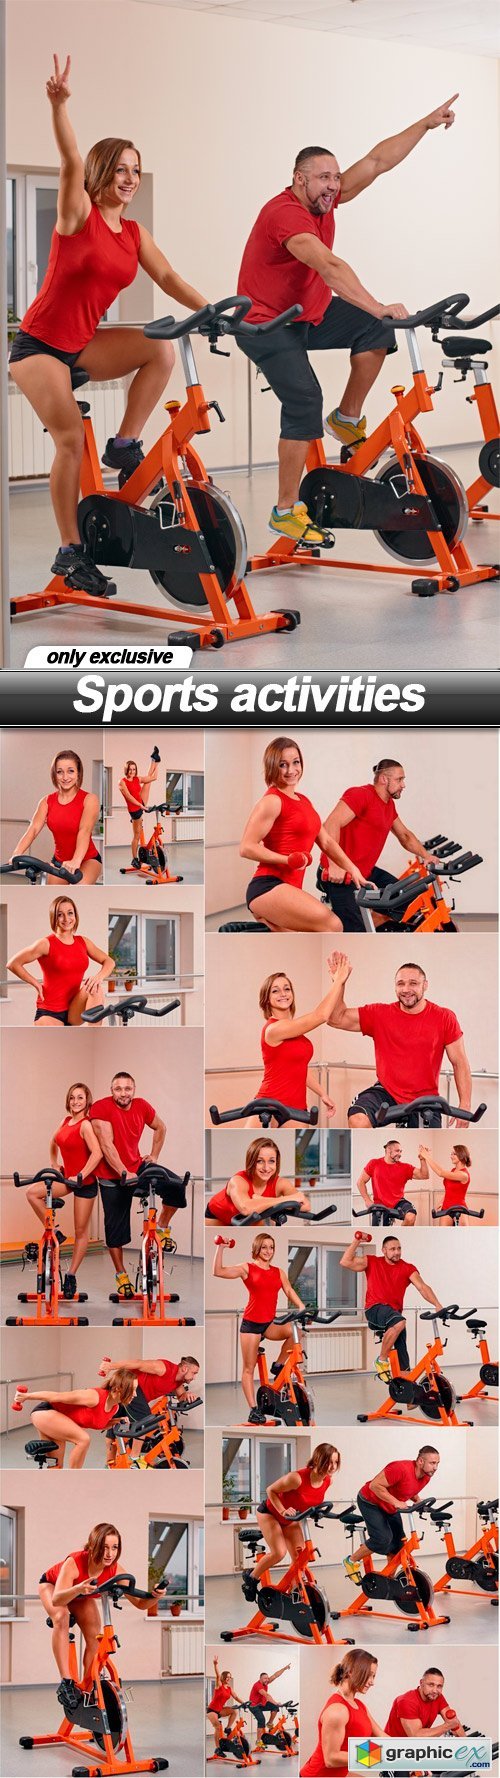 Sports activities - 14 UHQ JPEG